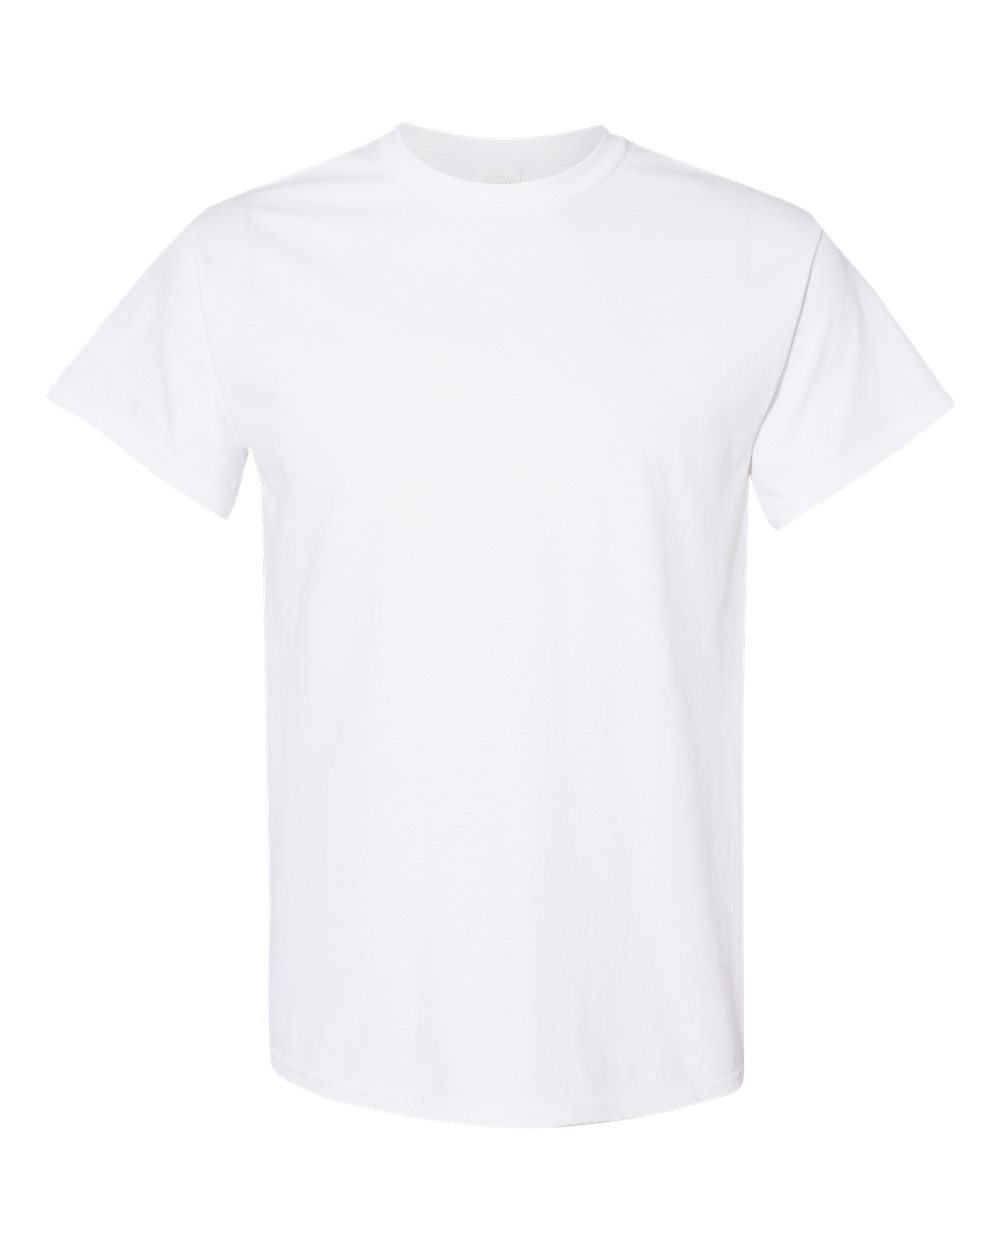 Blank T-Shirts (Adult)